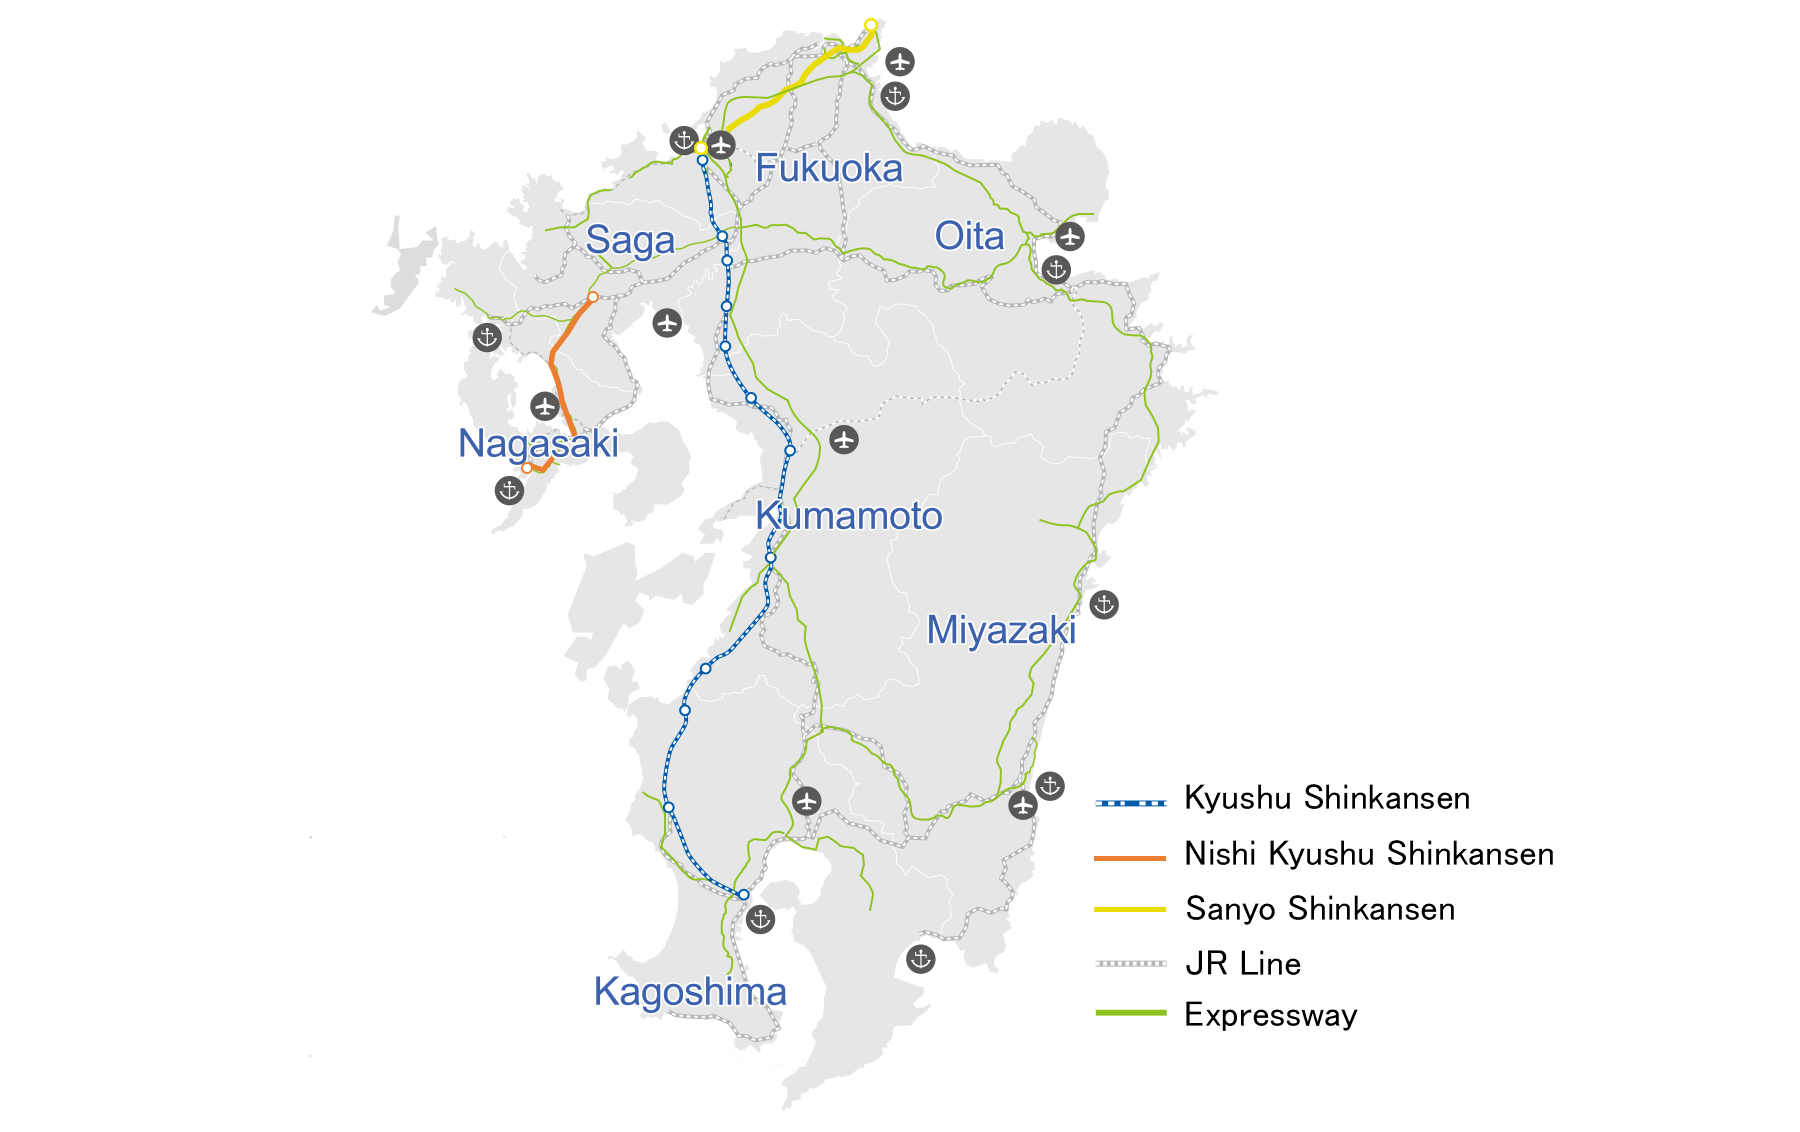 Transportation Infrastructure in Fukuoka and Kyushu